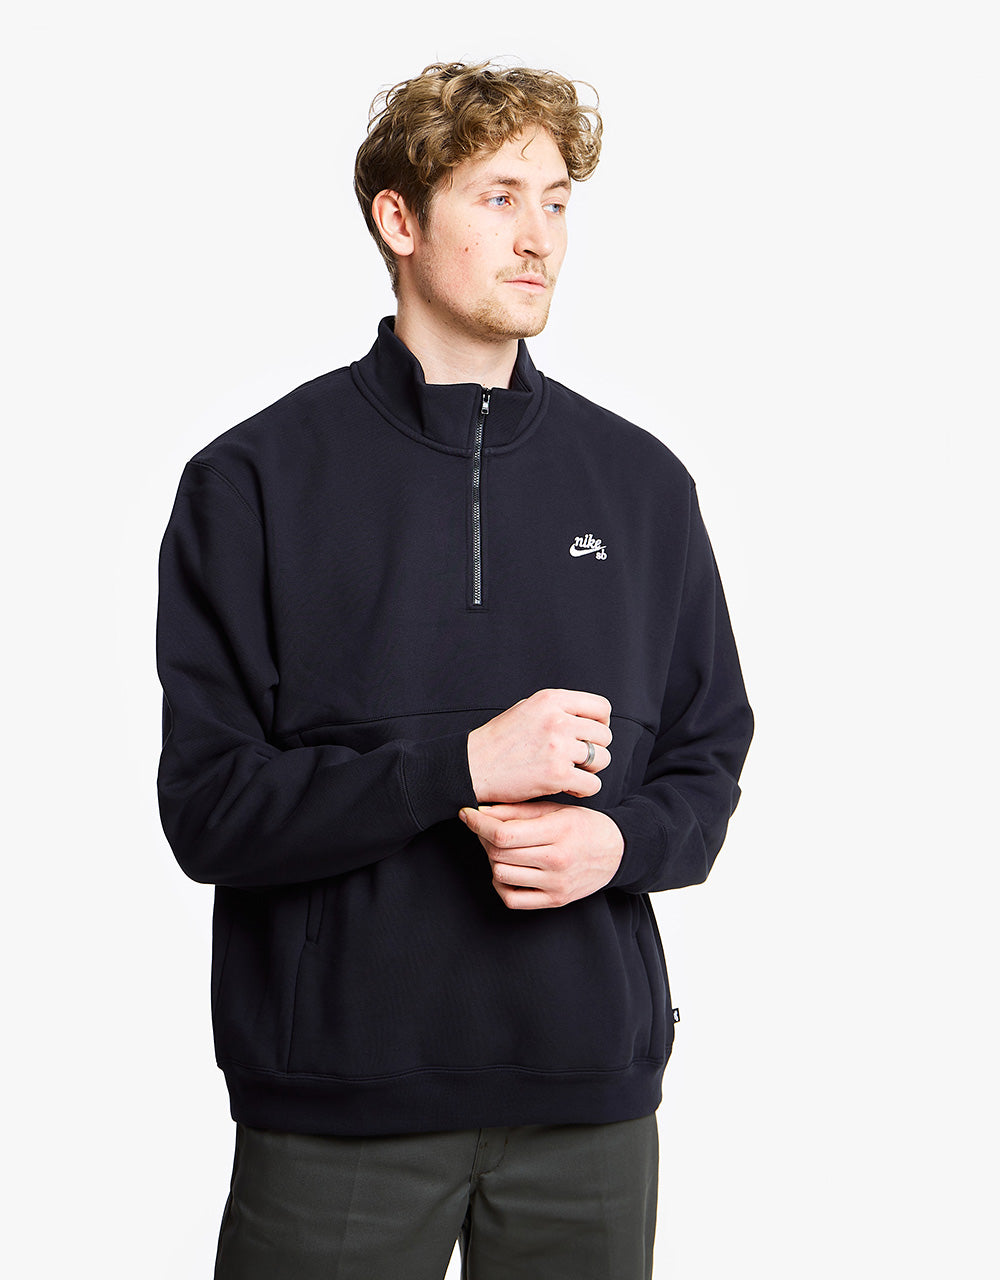 Nike SB GFX Premium 1/4 Zip Sweatshirt - Black/White